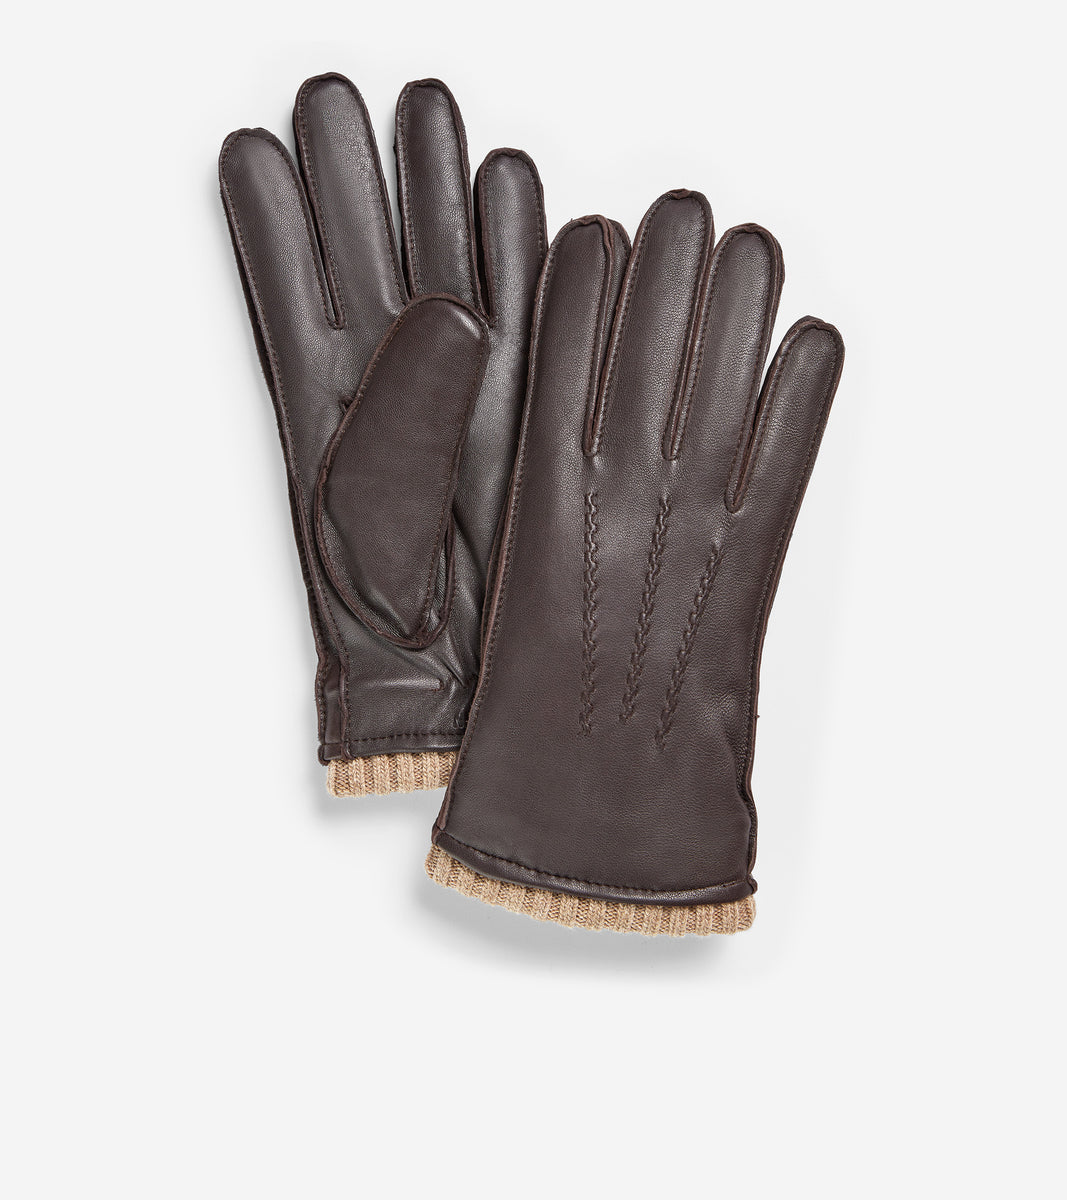 GRANDSERIES Leather Knit Cuff Glove